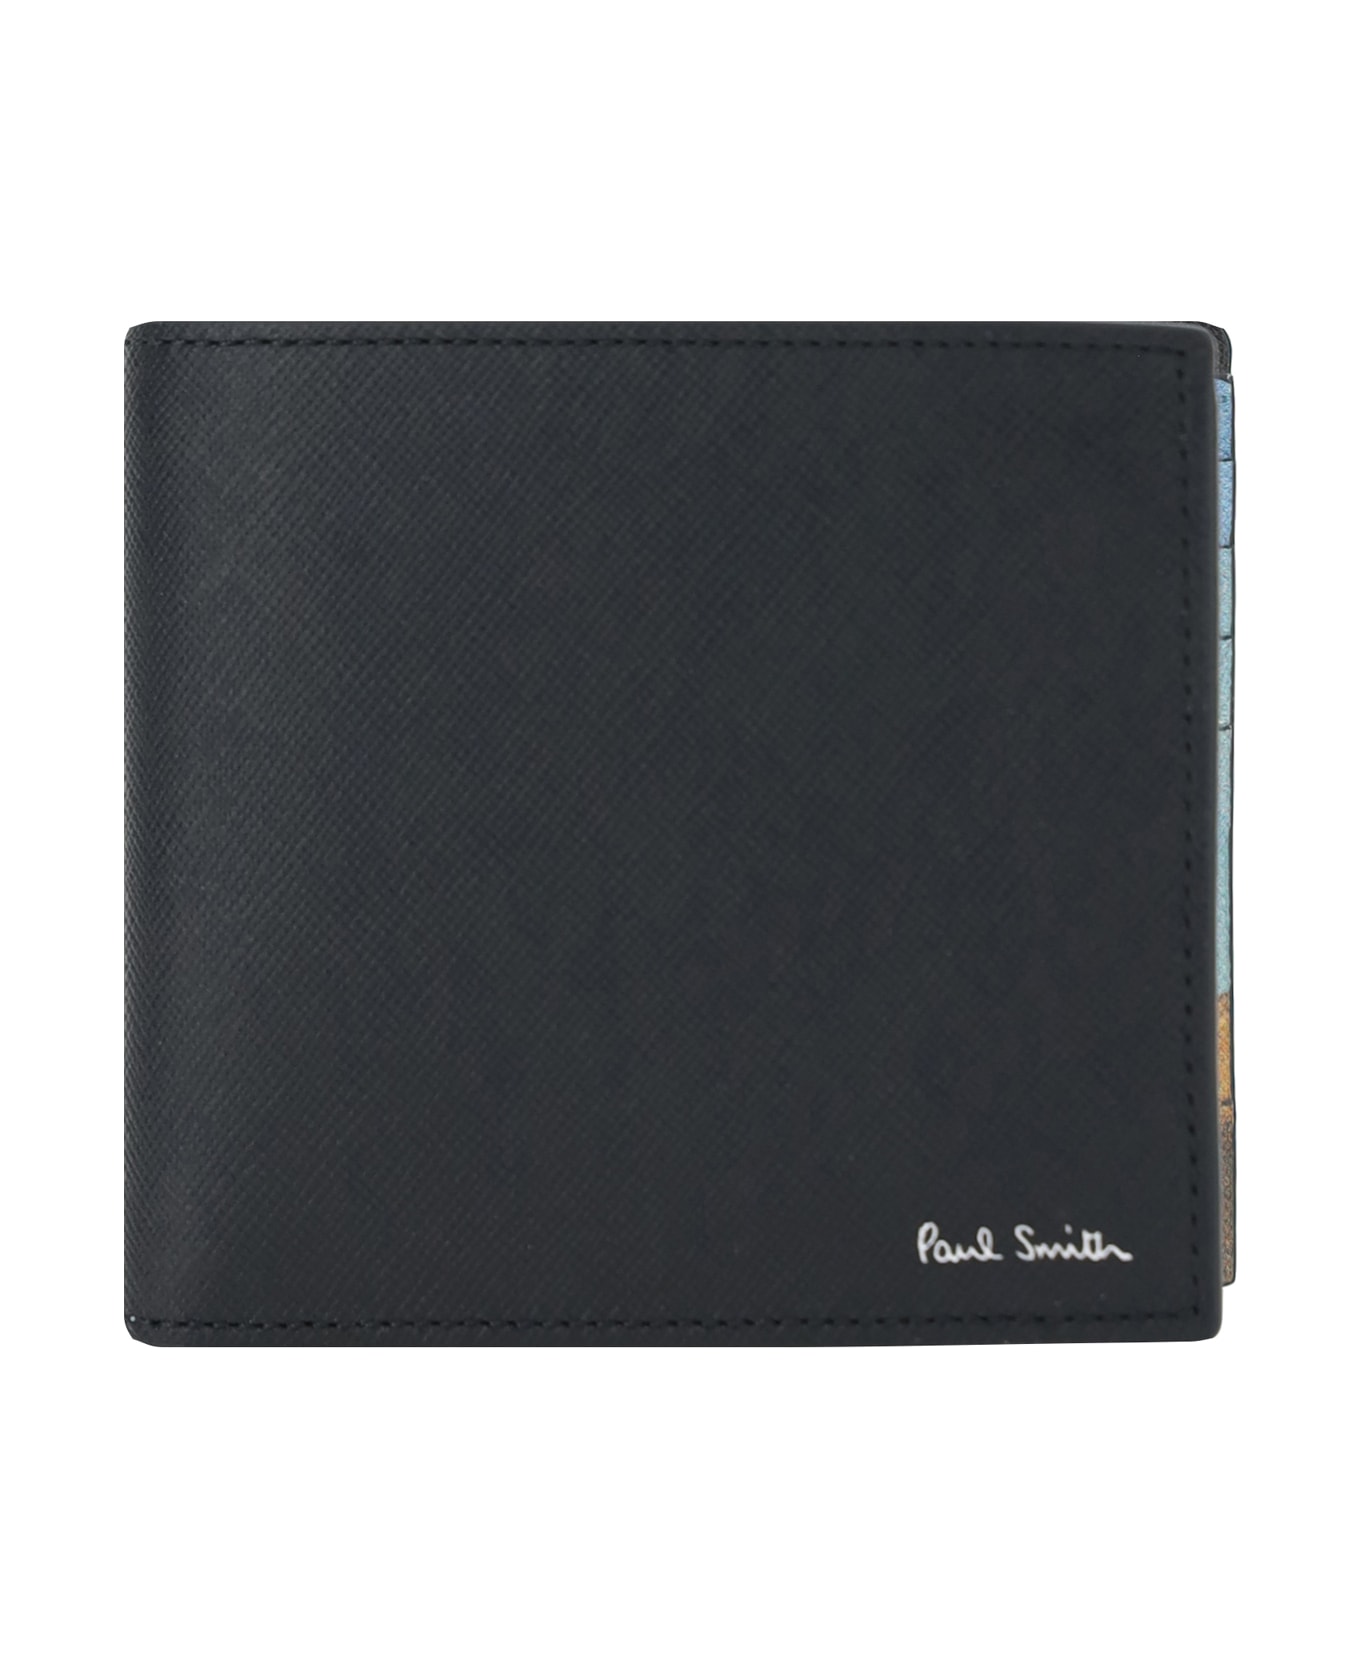 Paul Smith Wallet - BLACK